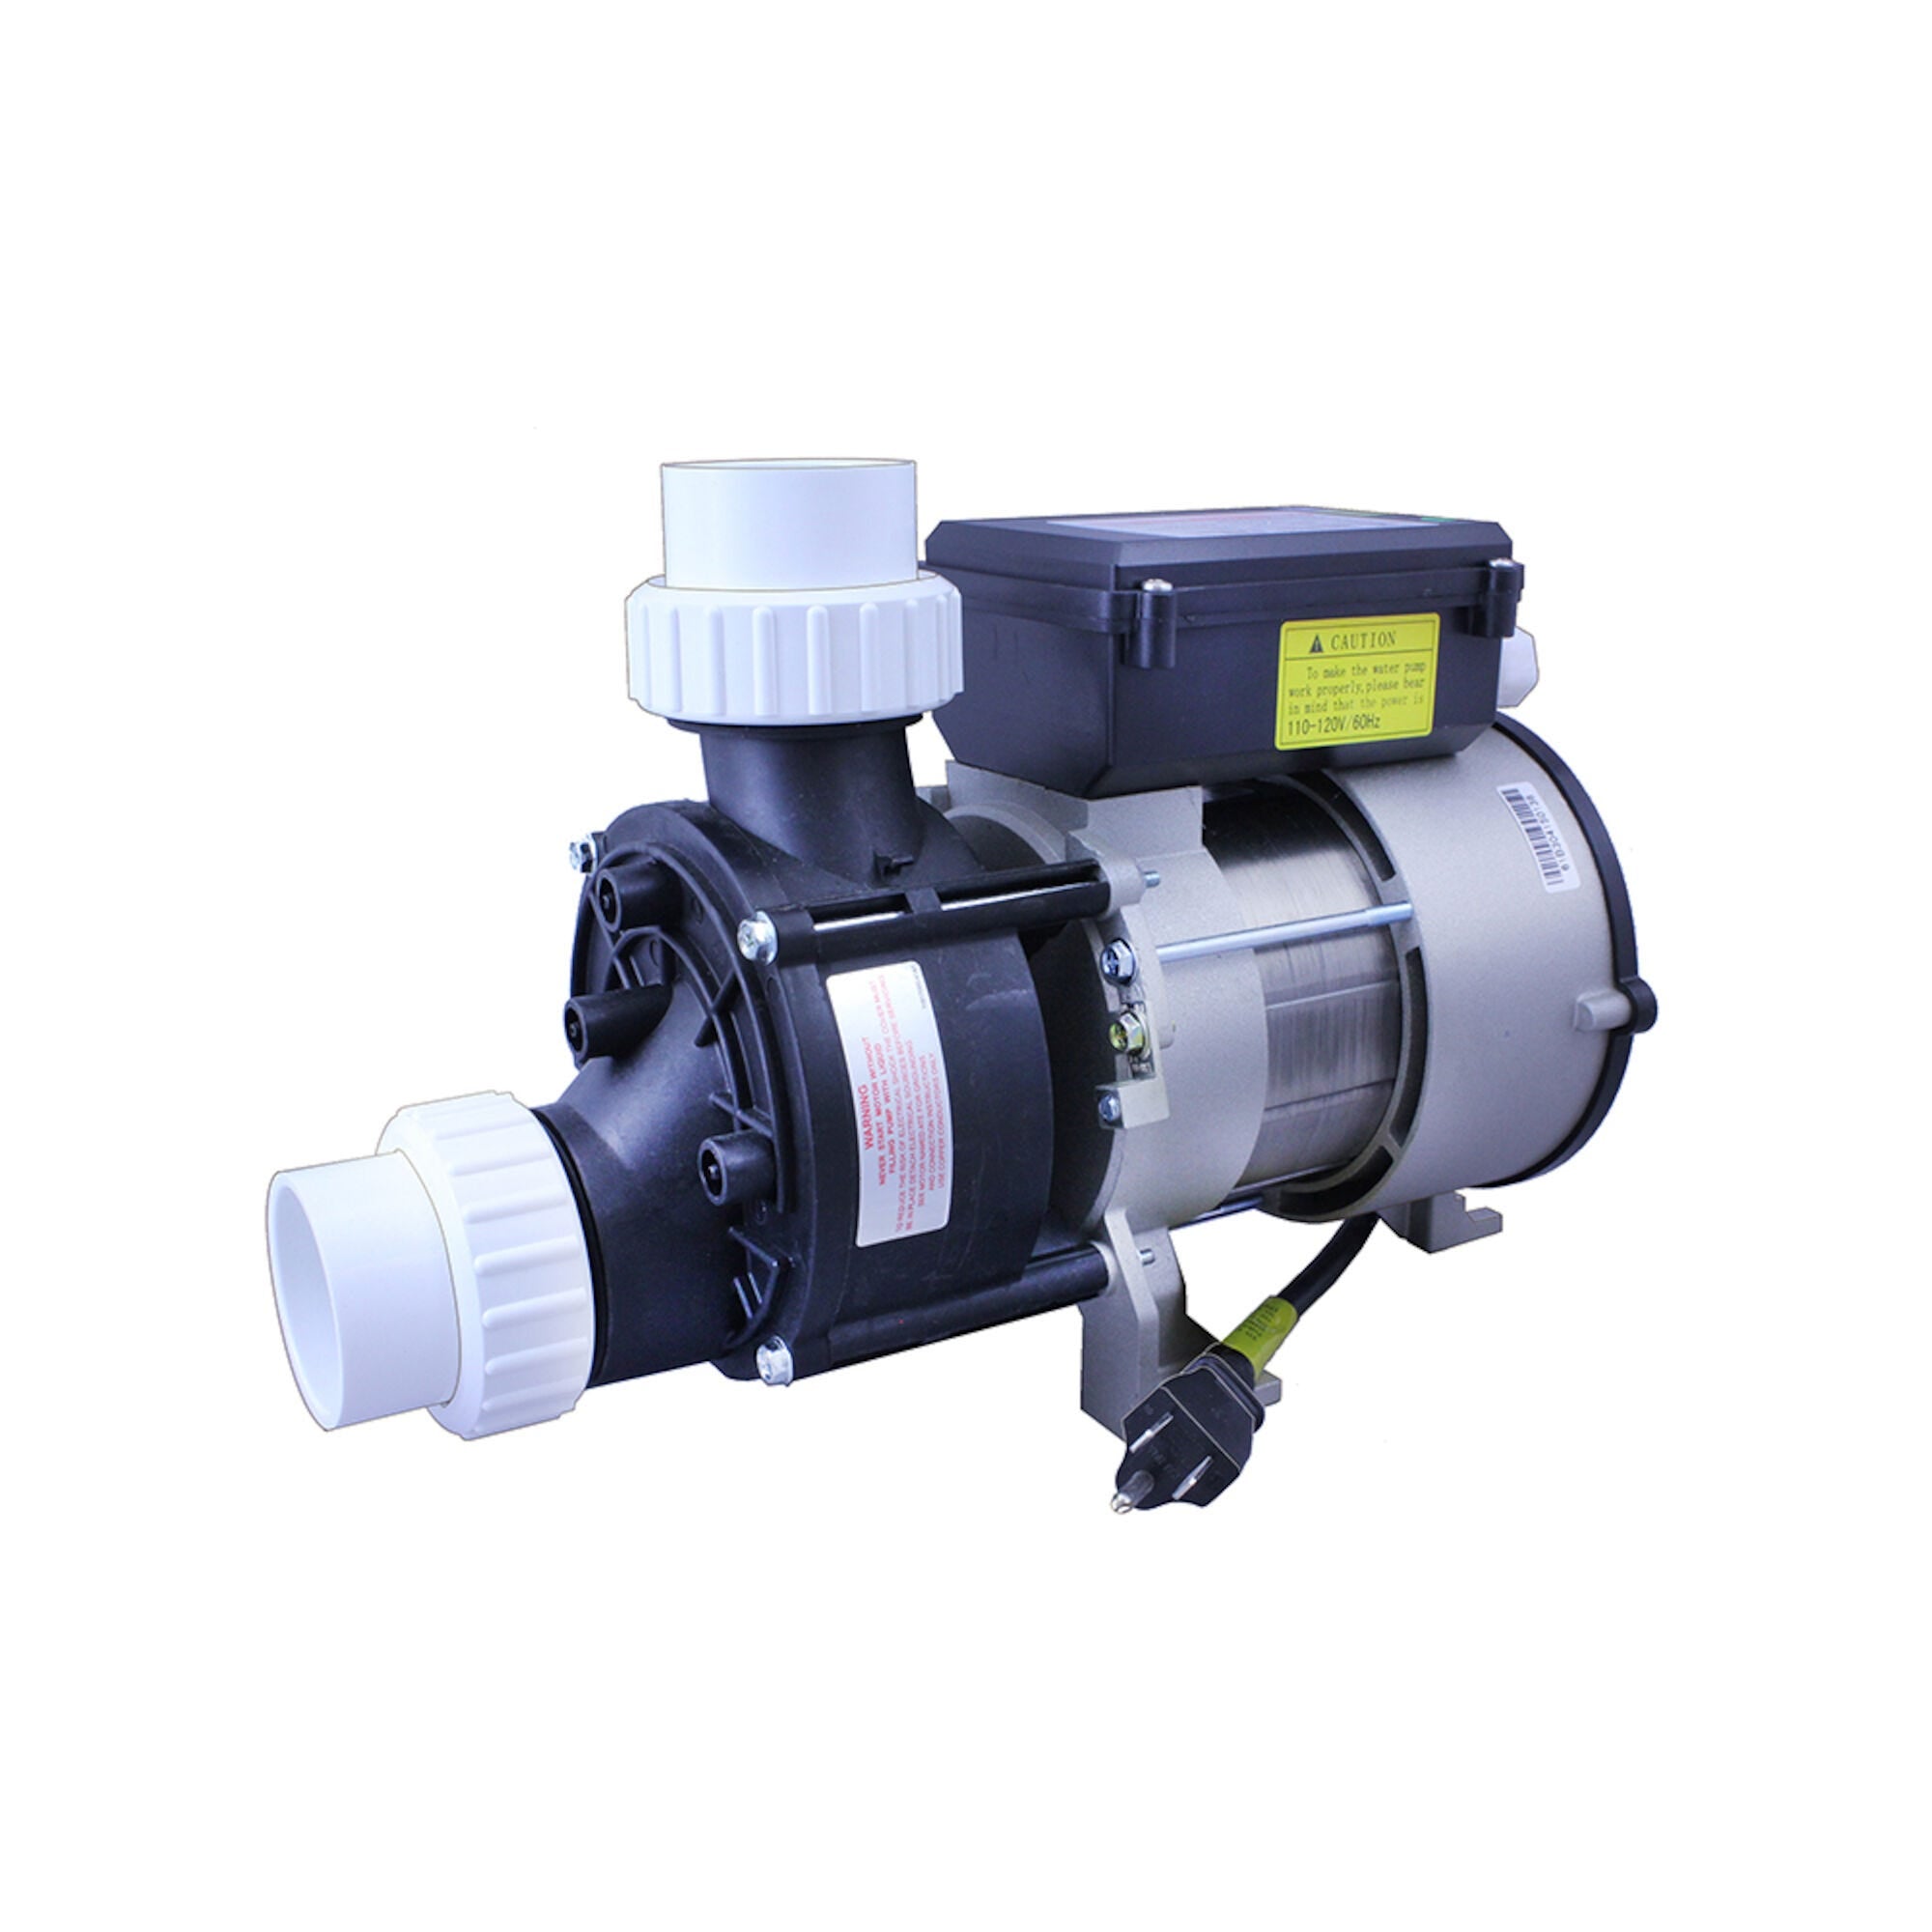 LX Bath Pump, 5.5a, 115v, Air Switch, Cord (WCH75)